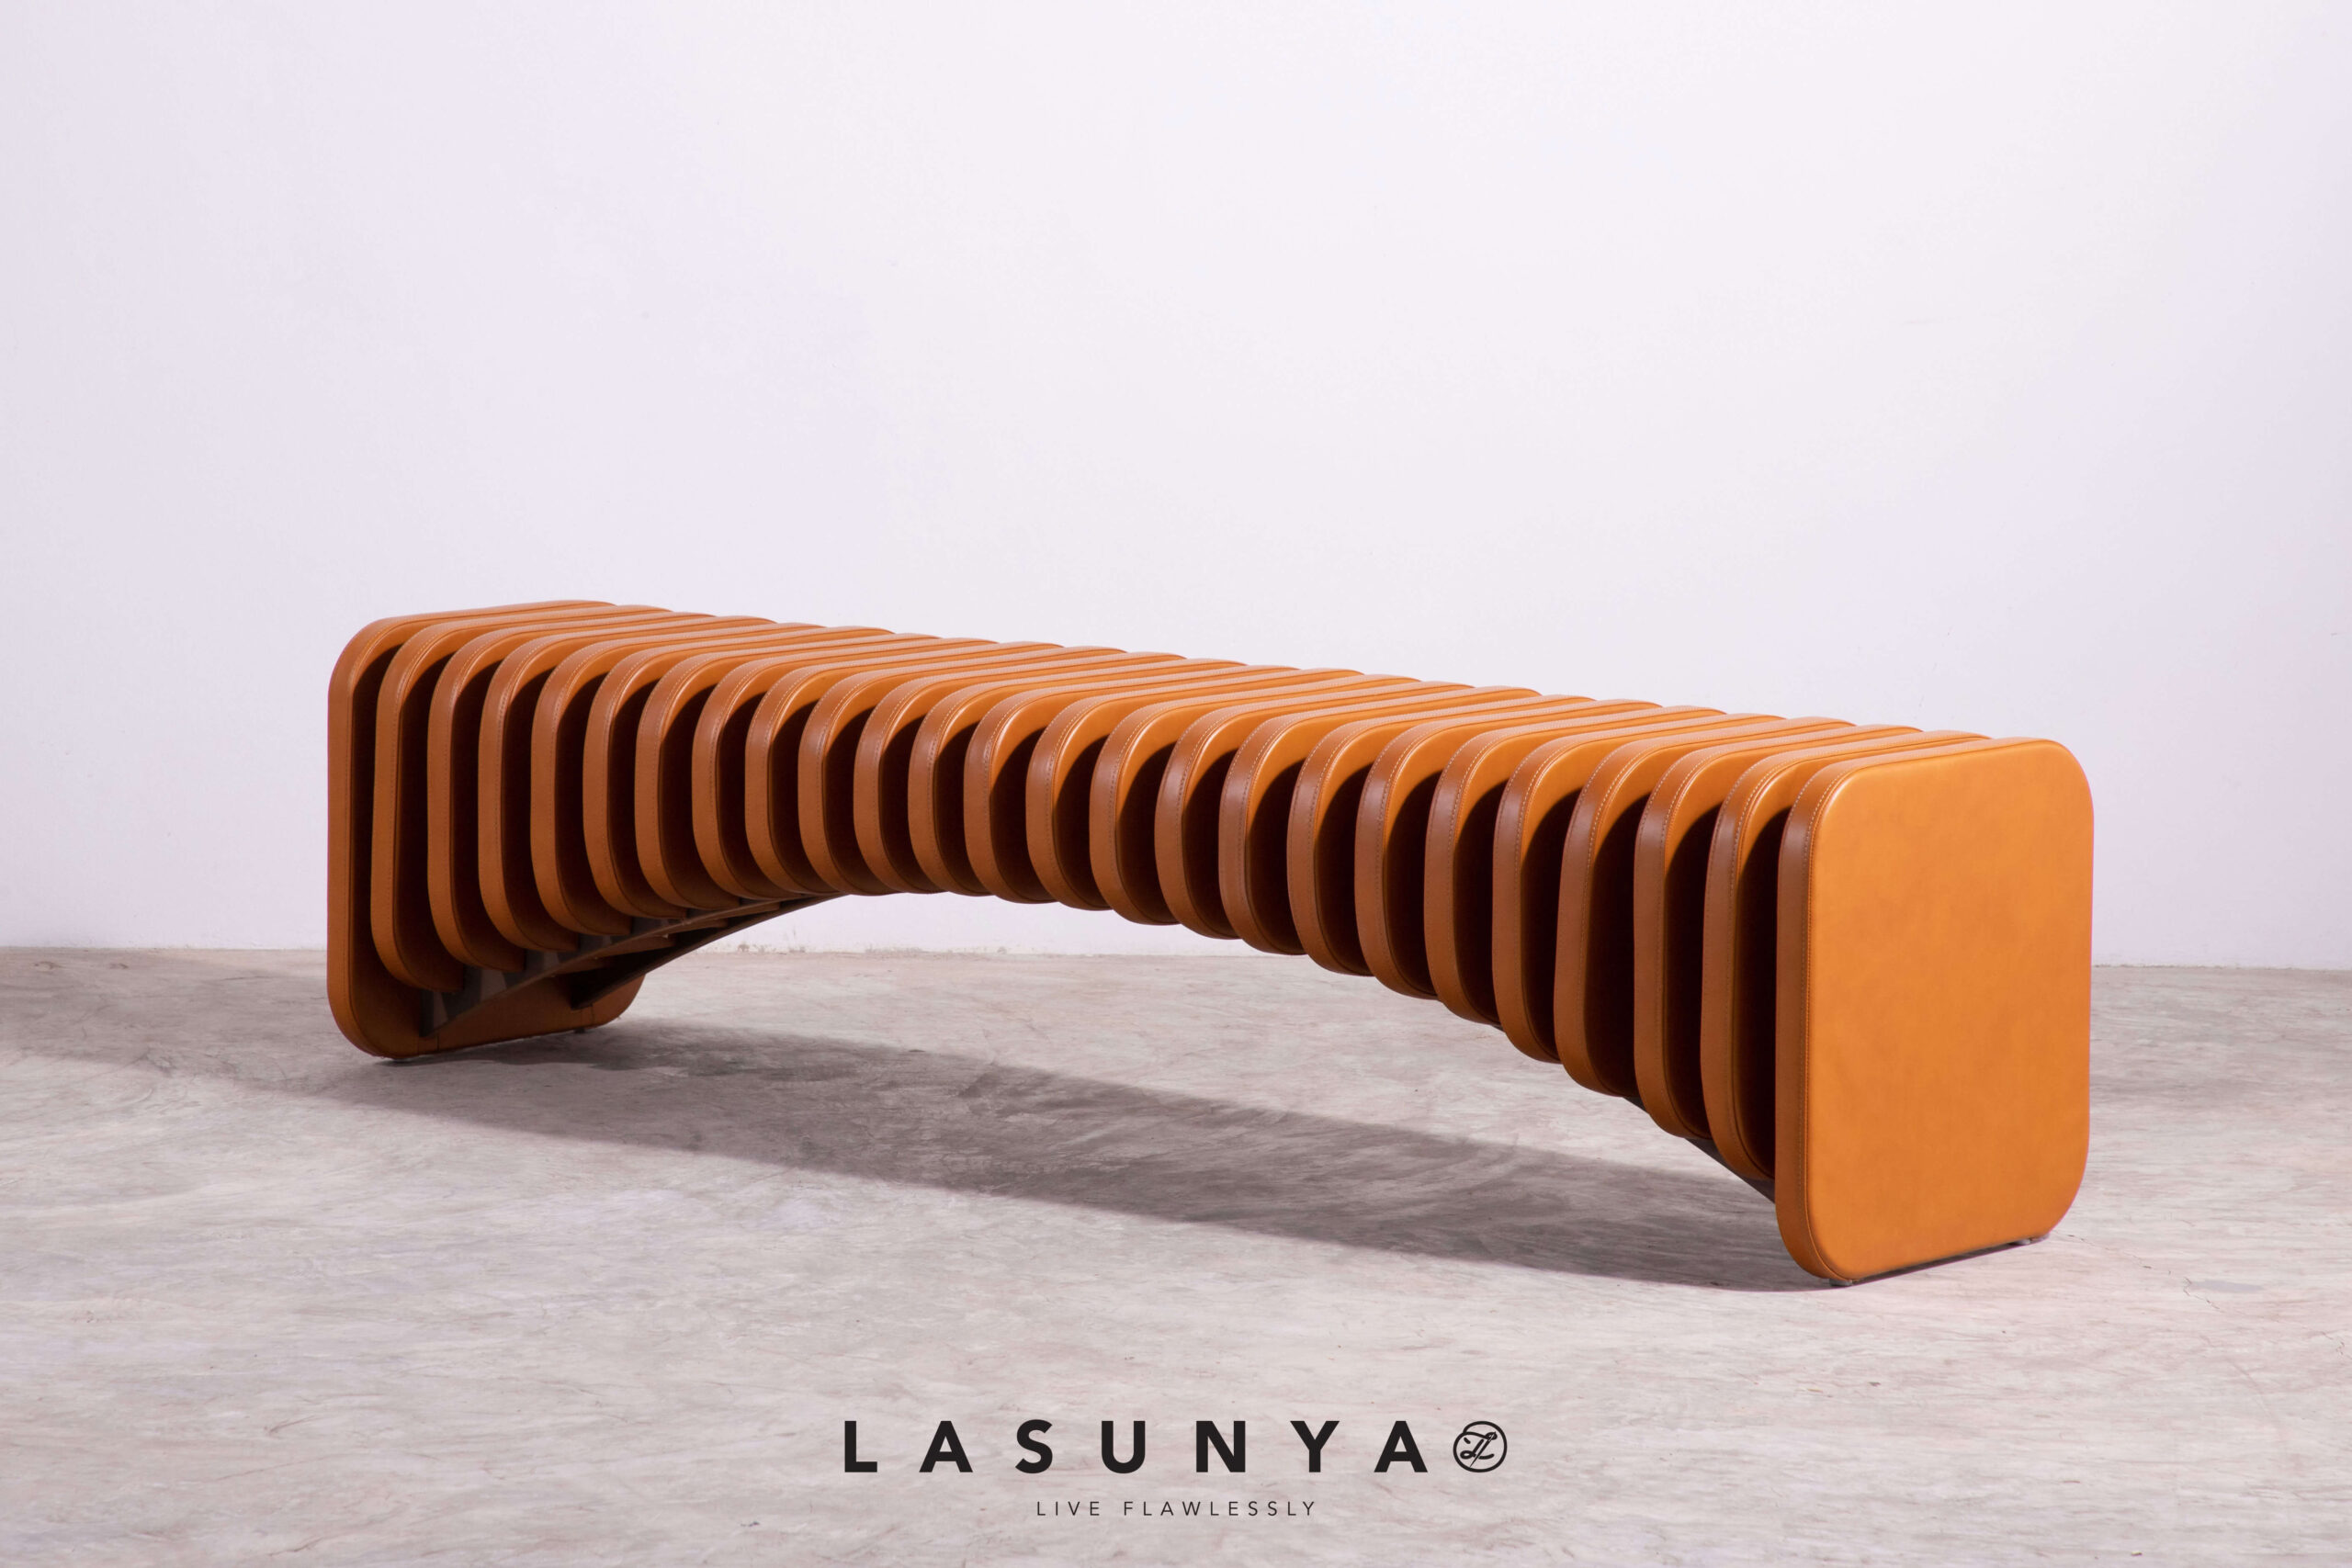 Skeleton Leather Bench Lasunya Sofa